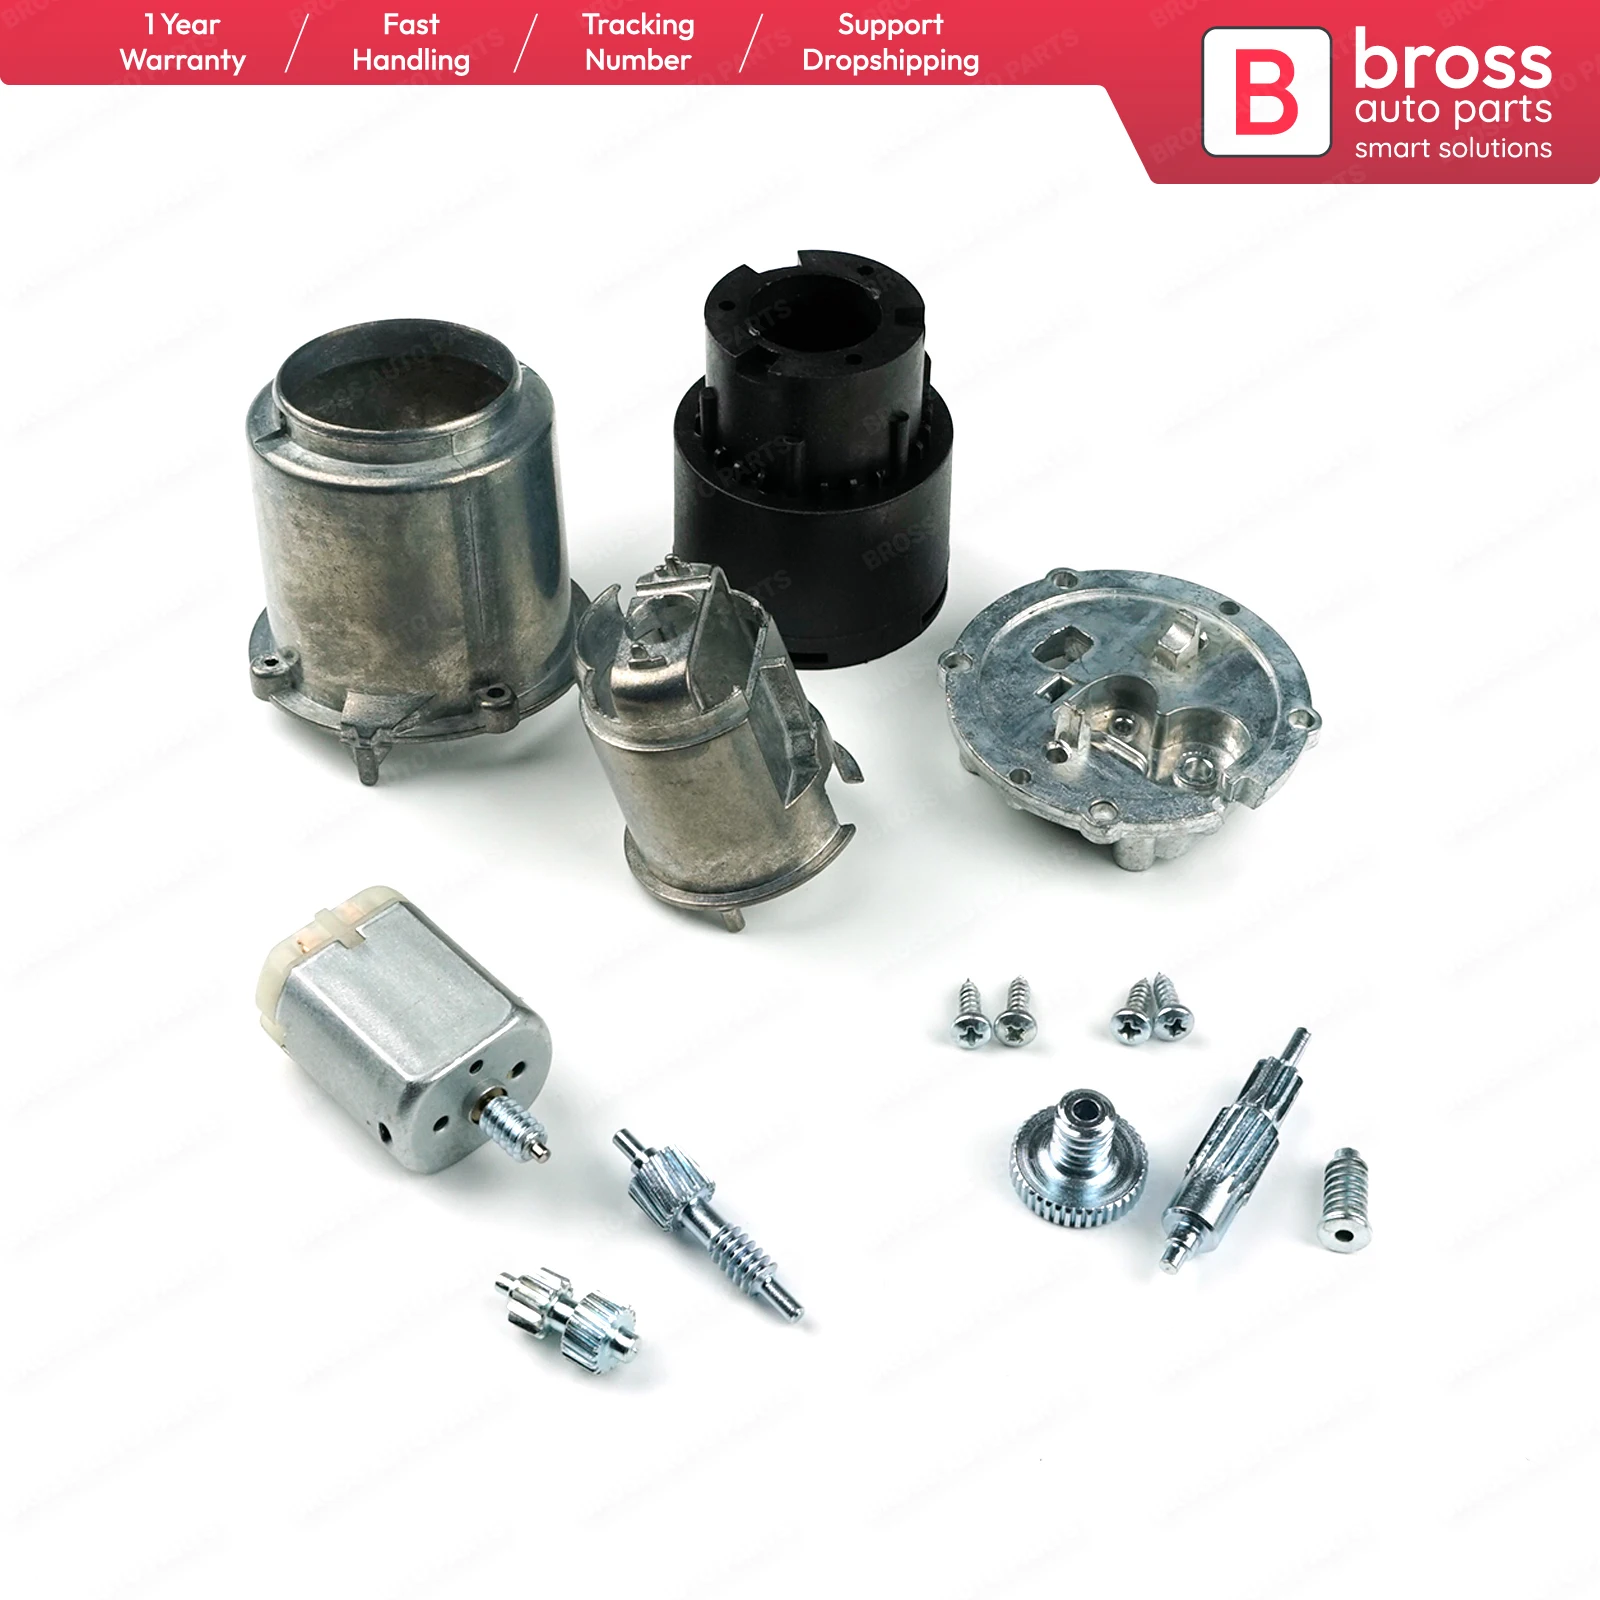 Bross Auto Parts LLC - BGE5 Side Mirror Motor Gear Folding Part